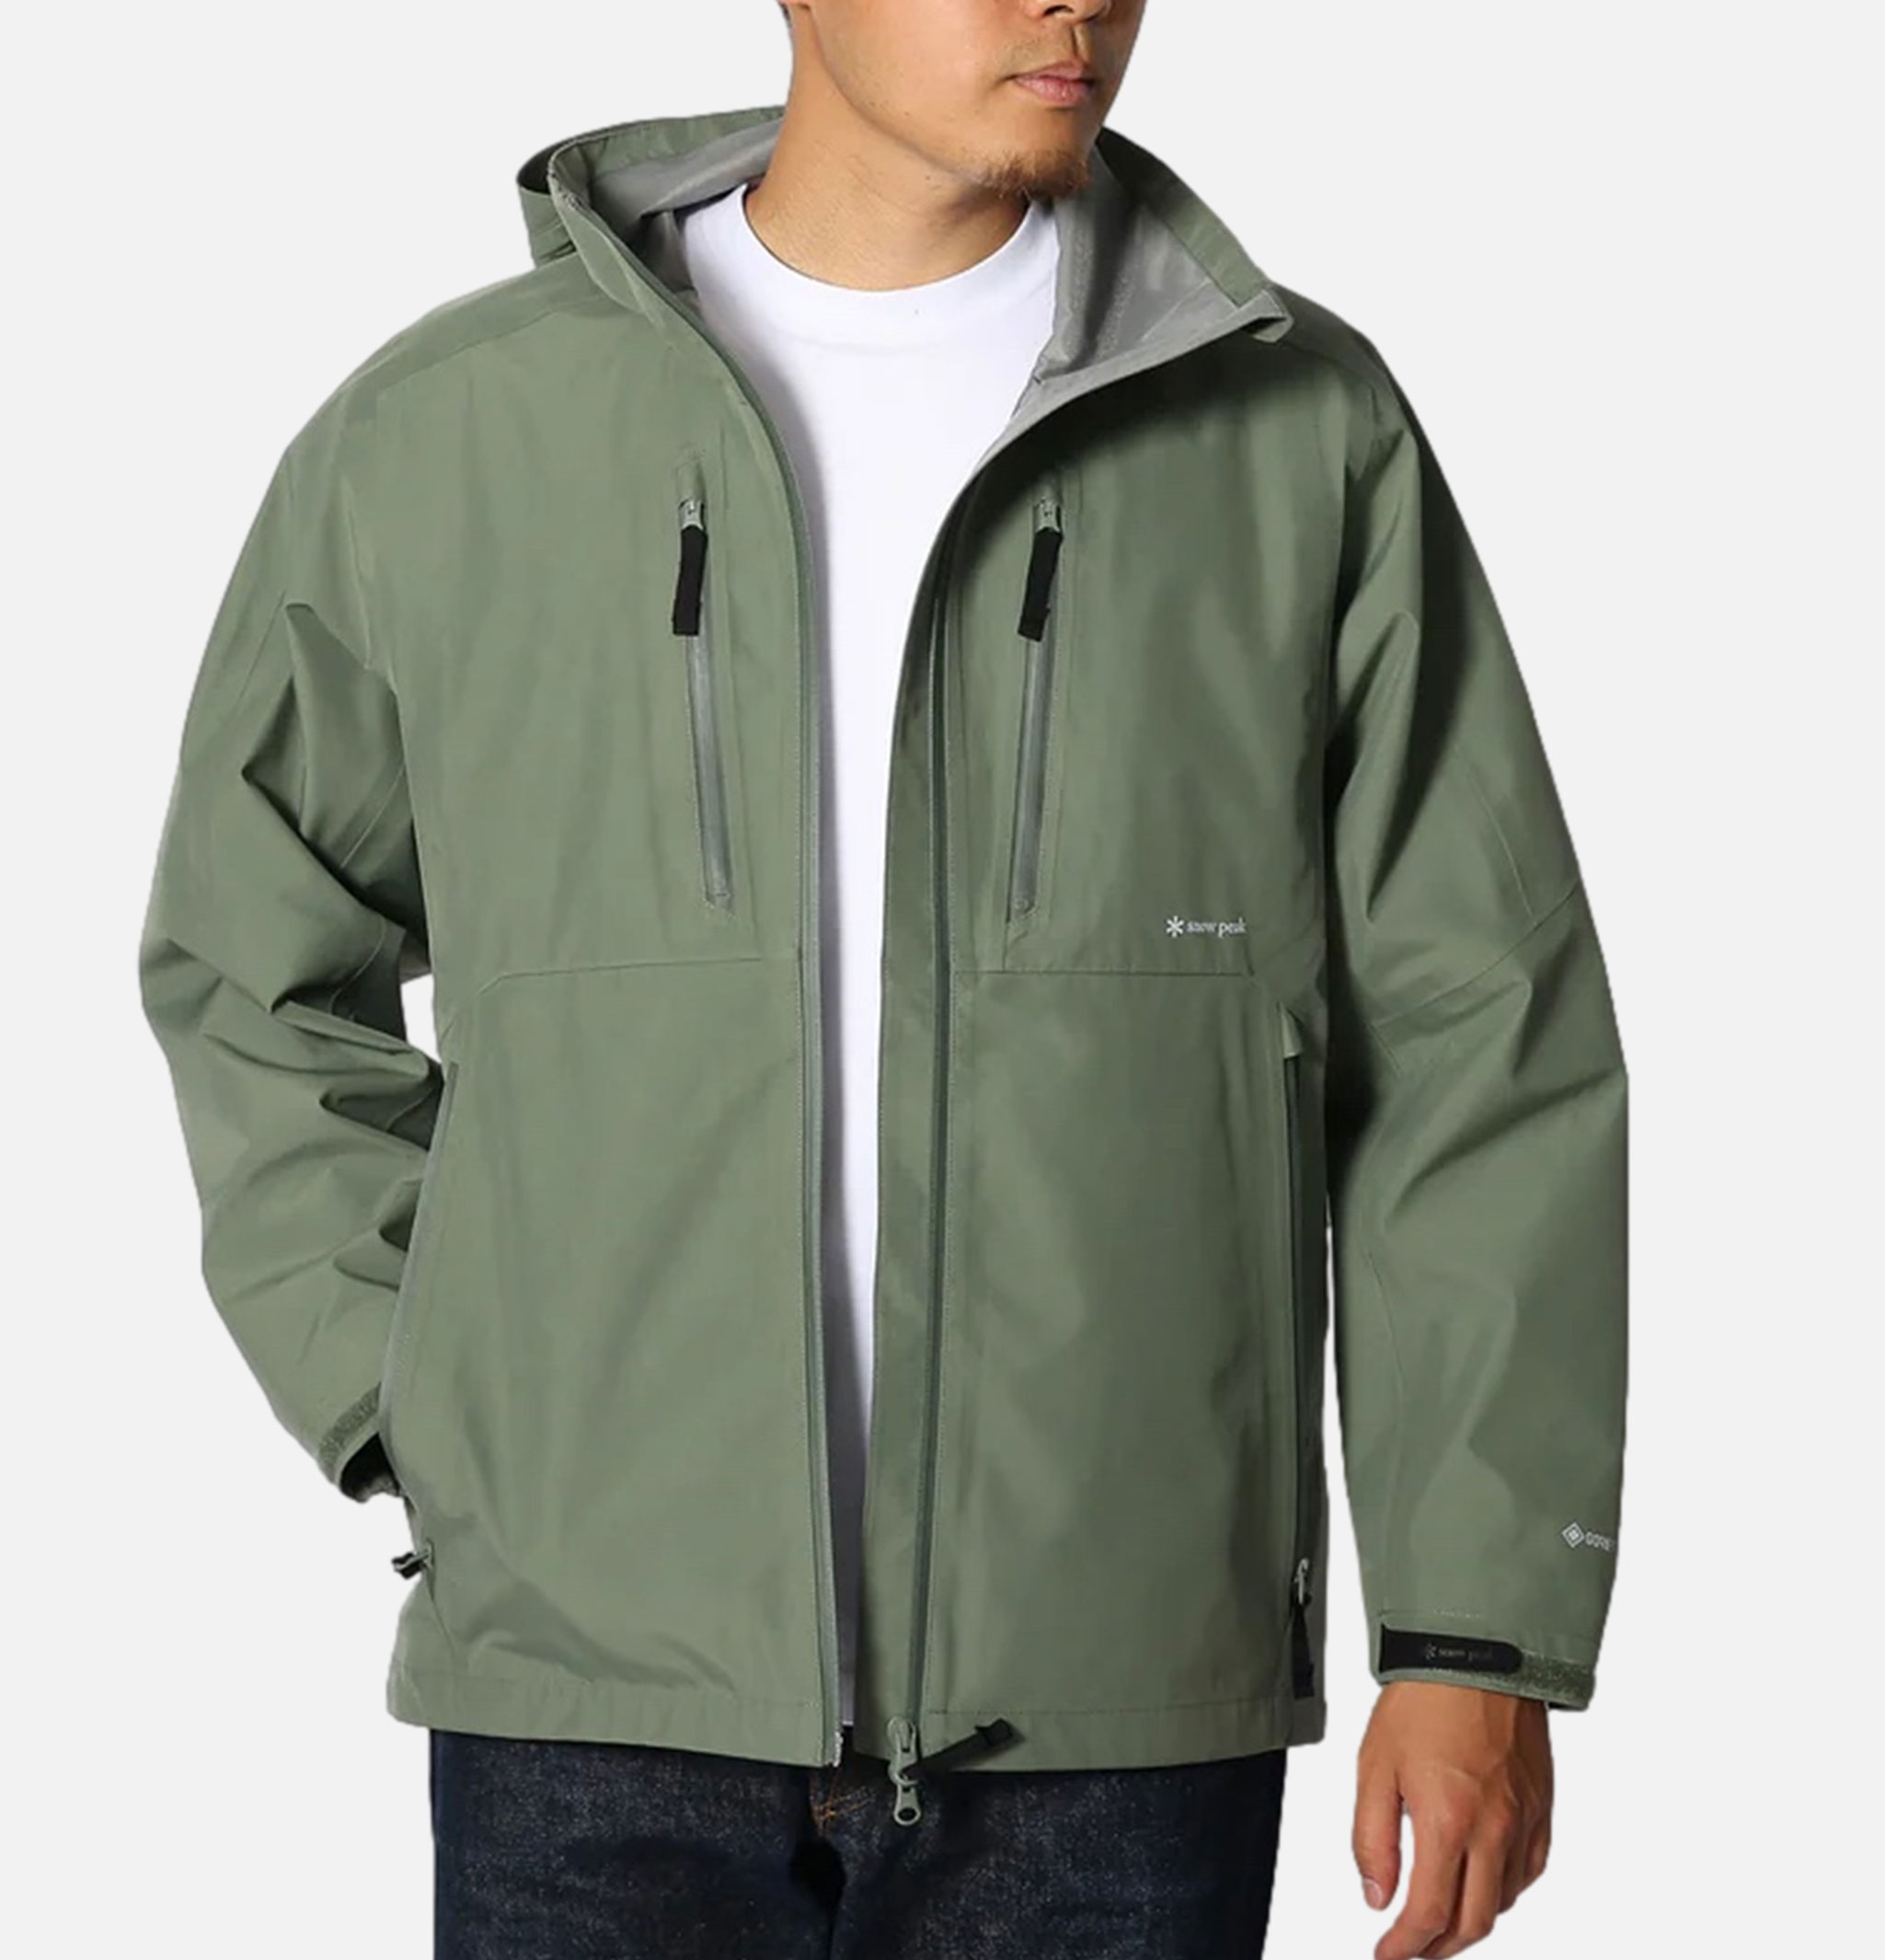 GORE-TEX Snow Peak Foliage rain jacket